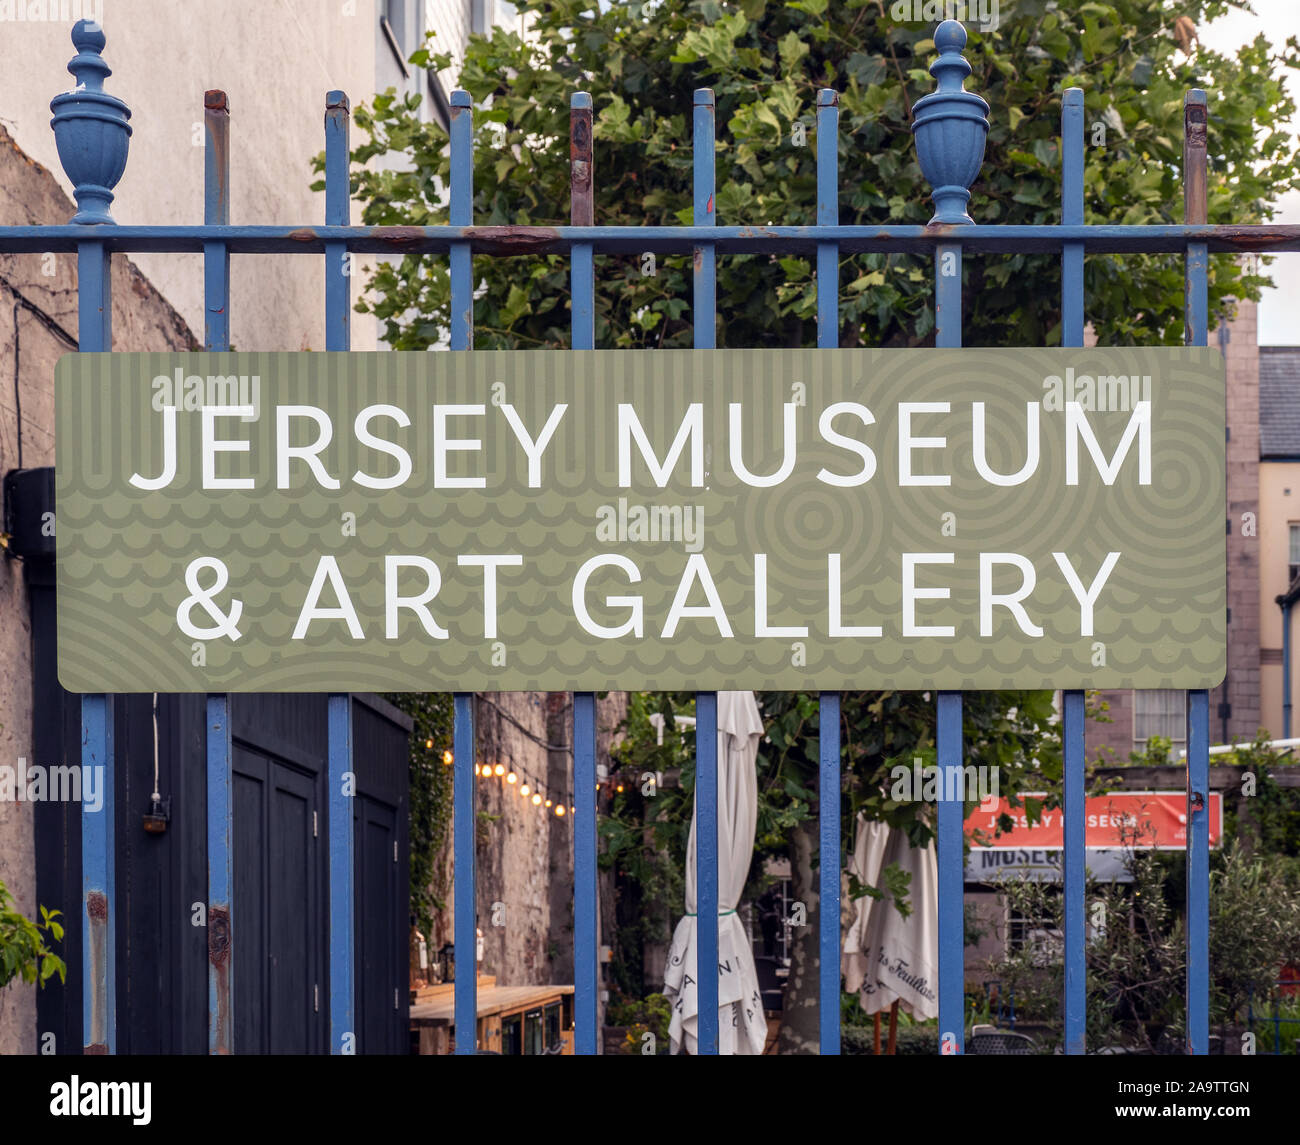 Jersey Museum & Art Gallery sign, St Helier, Jersey, Channel Islands Stock  Photo - Alamy